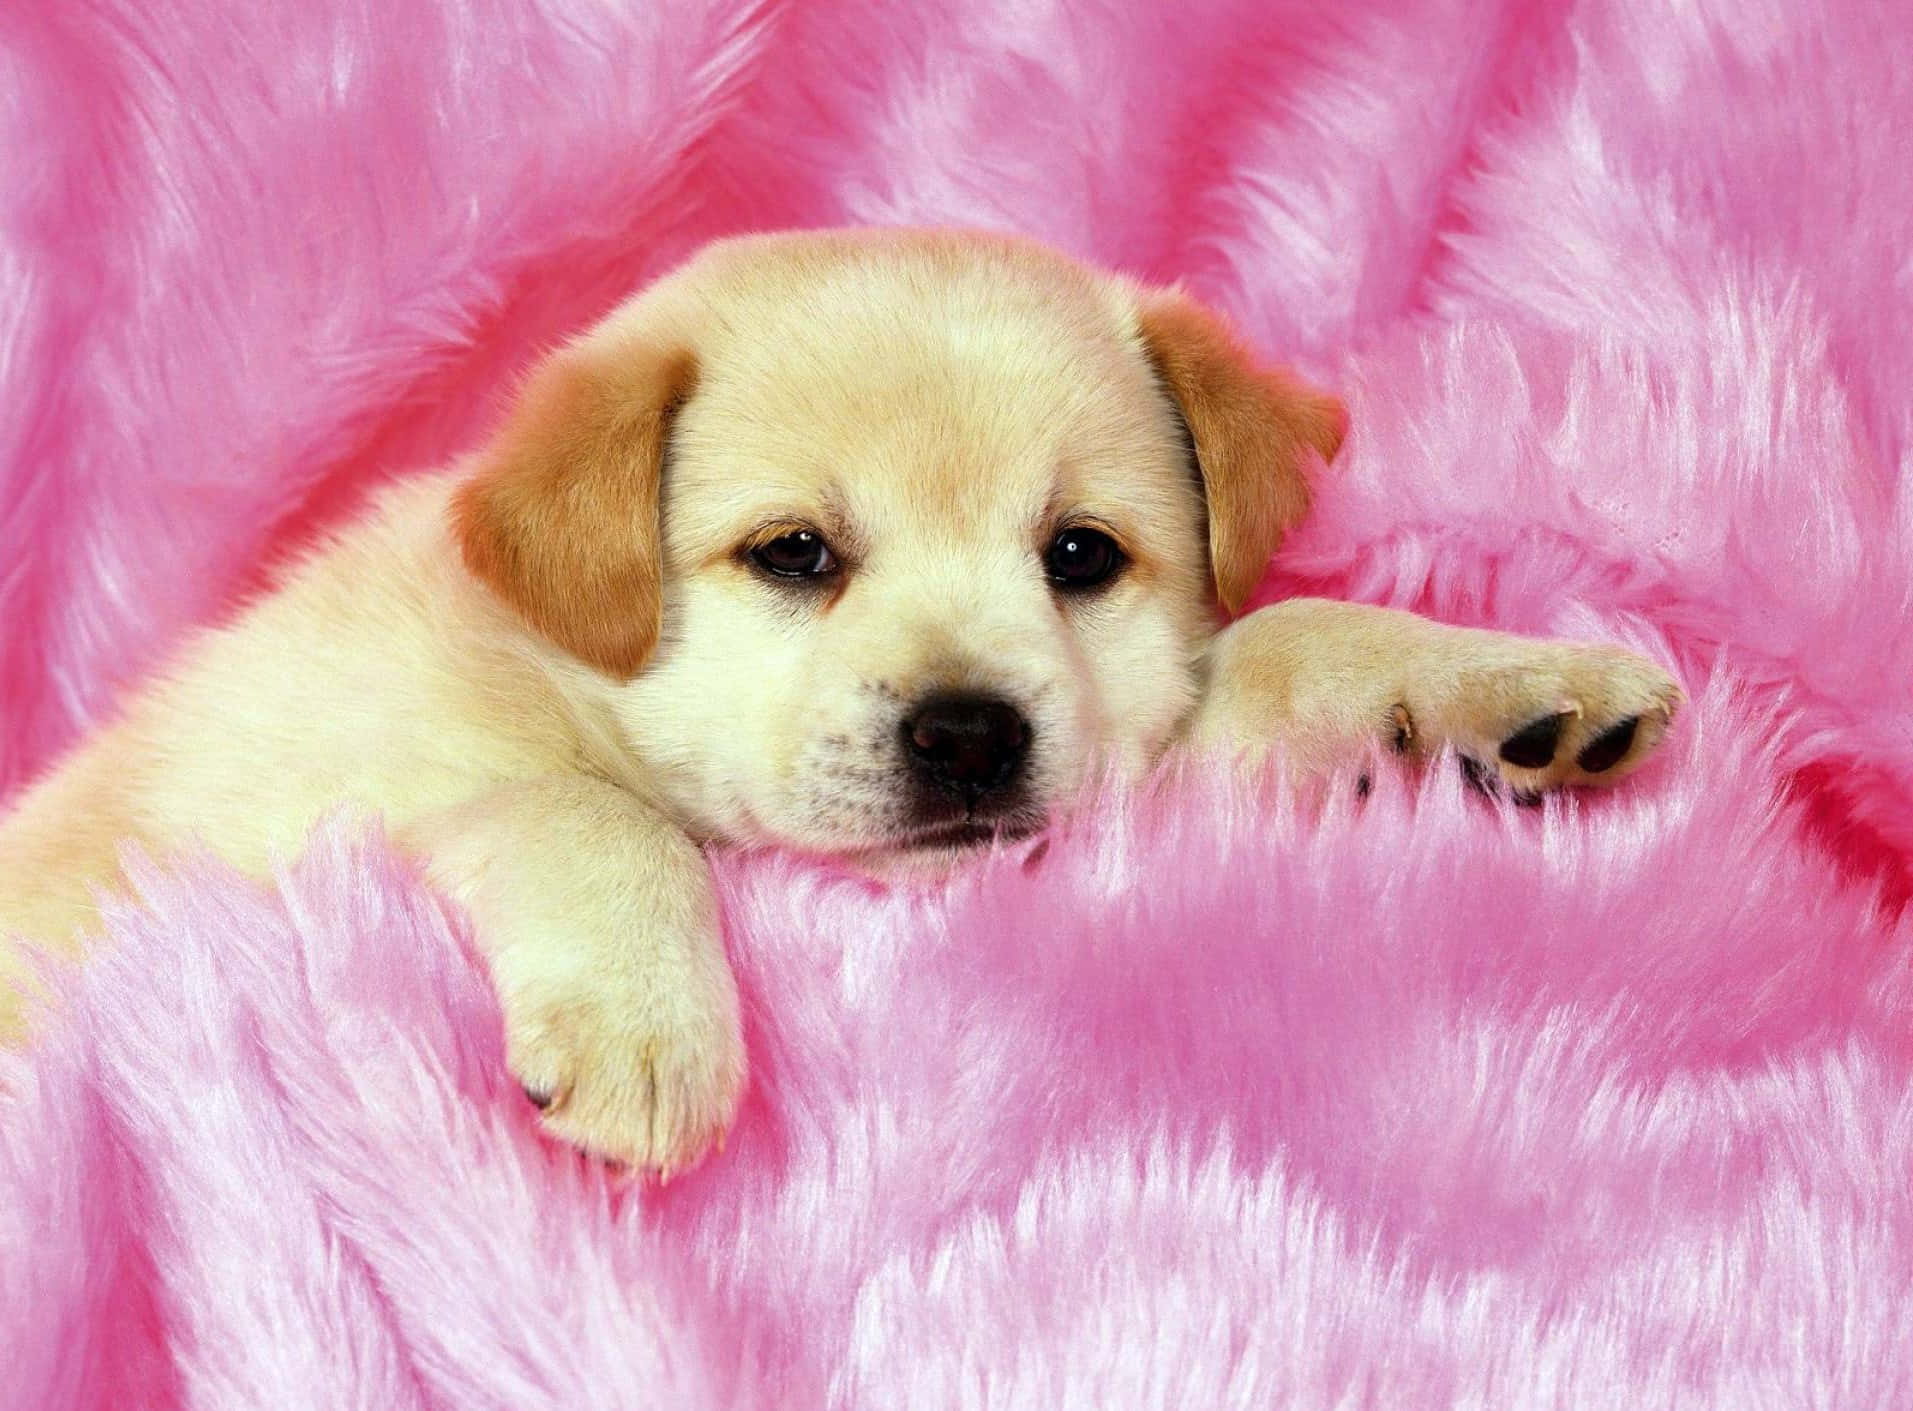 200+] Pink Puppies Wallpapers | Wallpapers.com